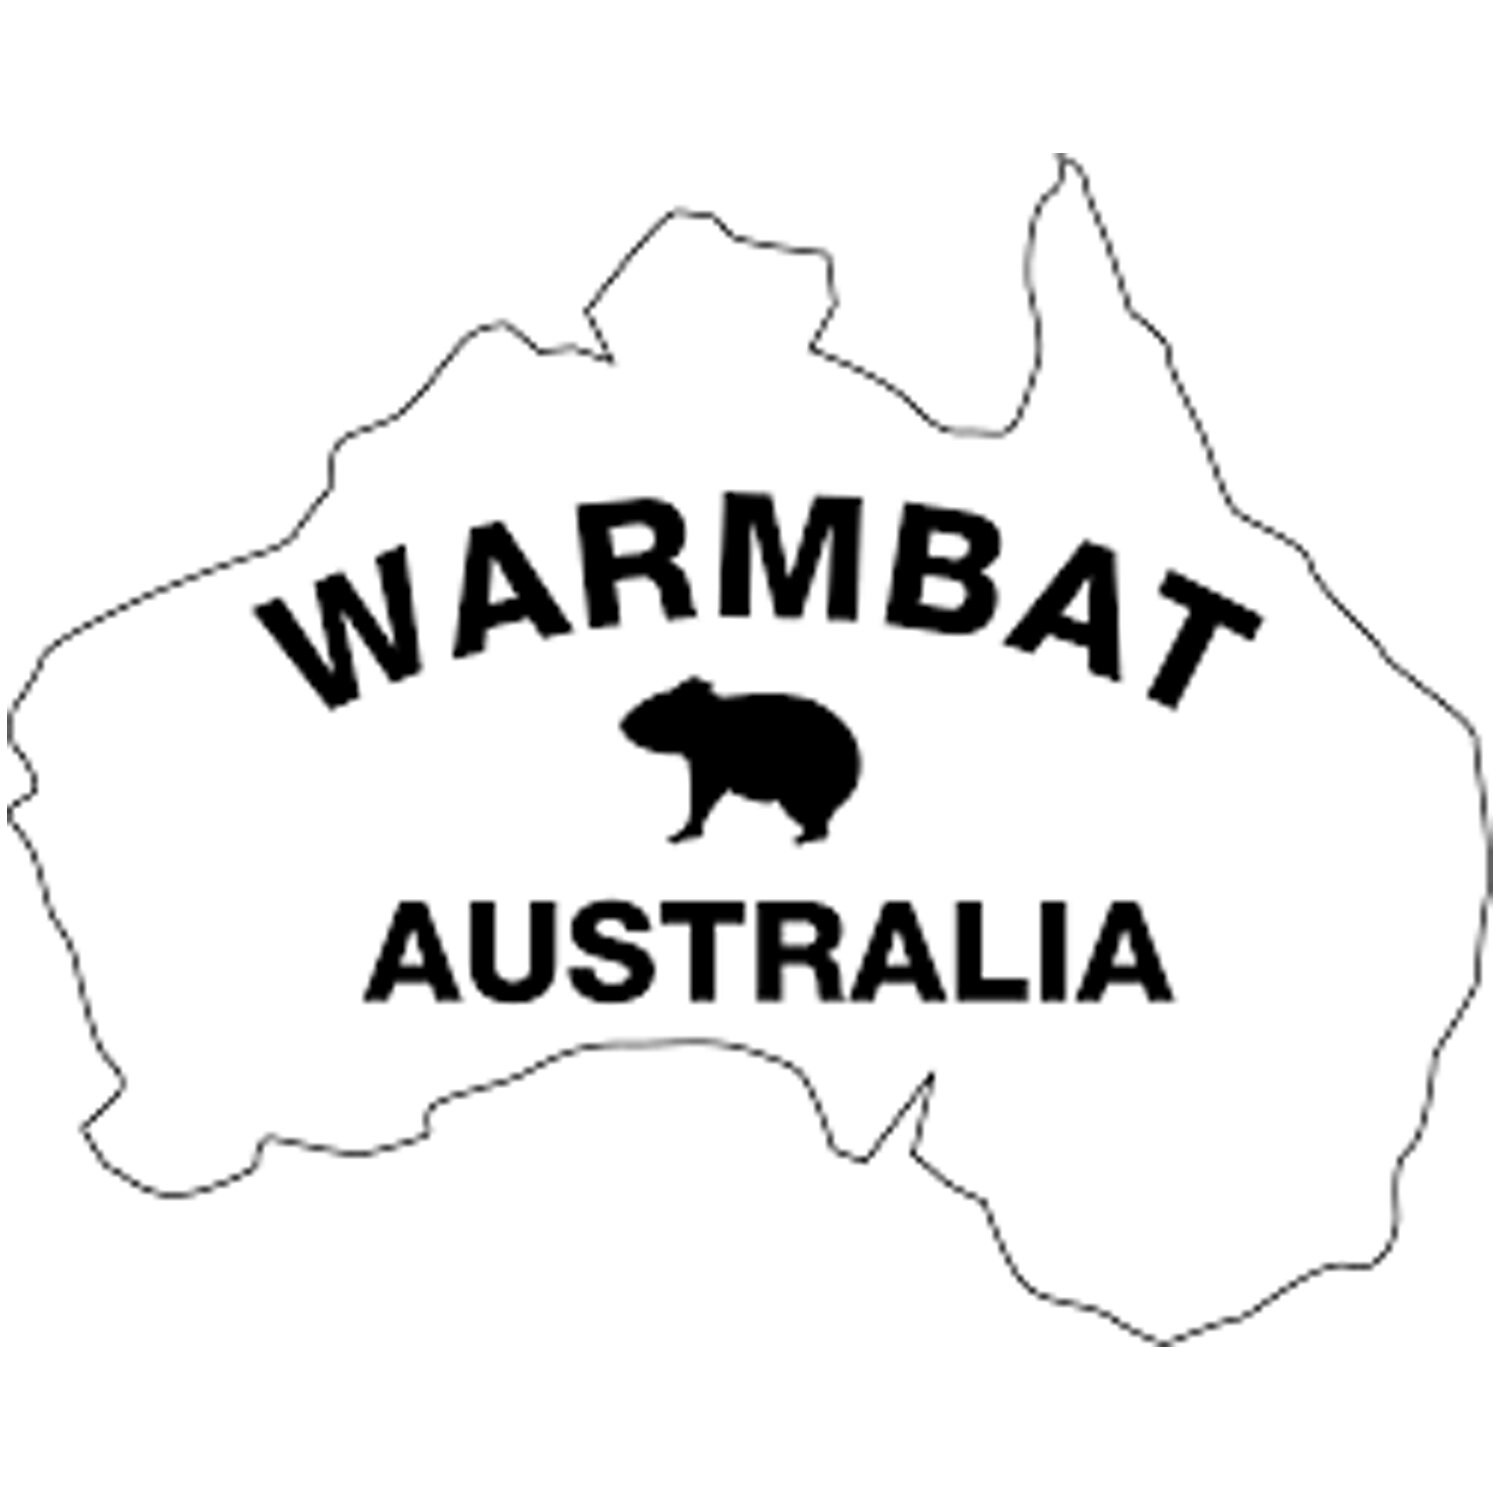 Warmbat Australia.jpg